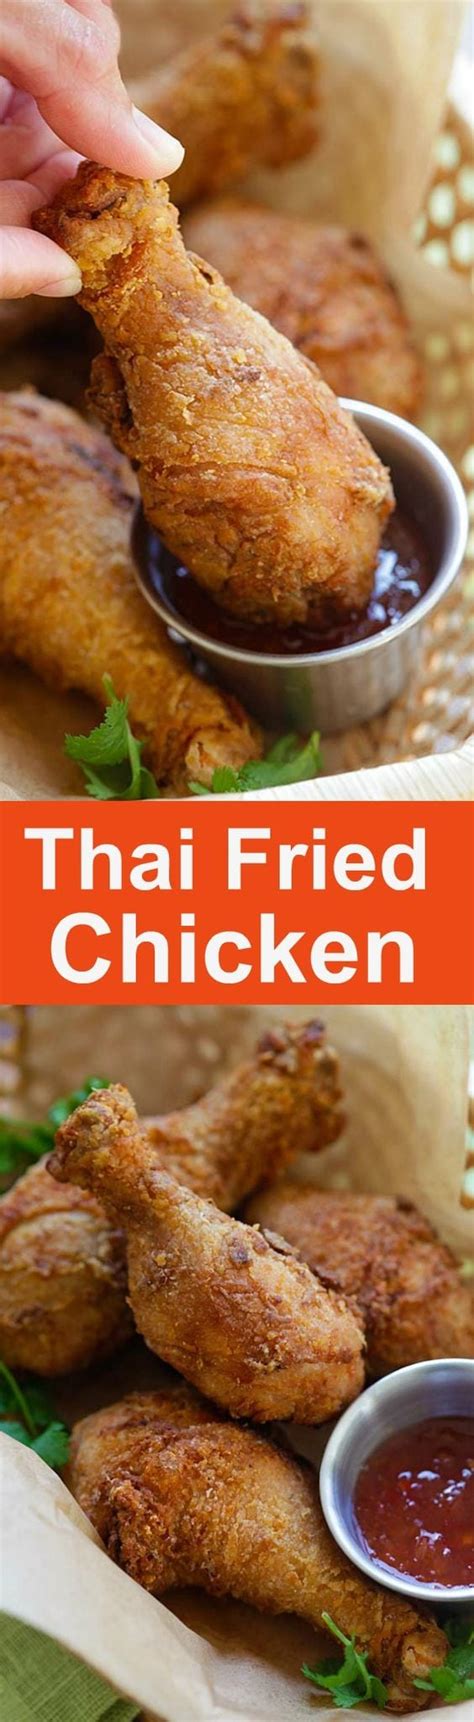 Texas chicken debut in southern peninsular malaysia. Thai Fried Chicken - Rasa Malaysia